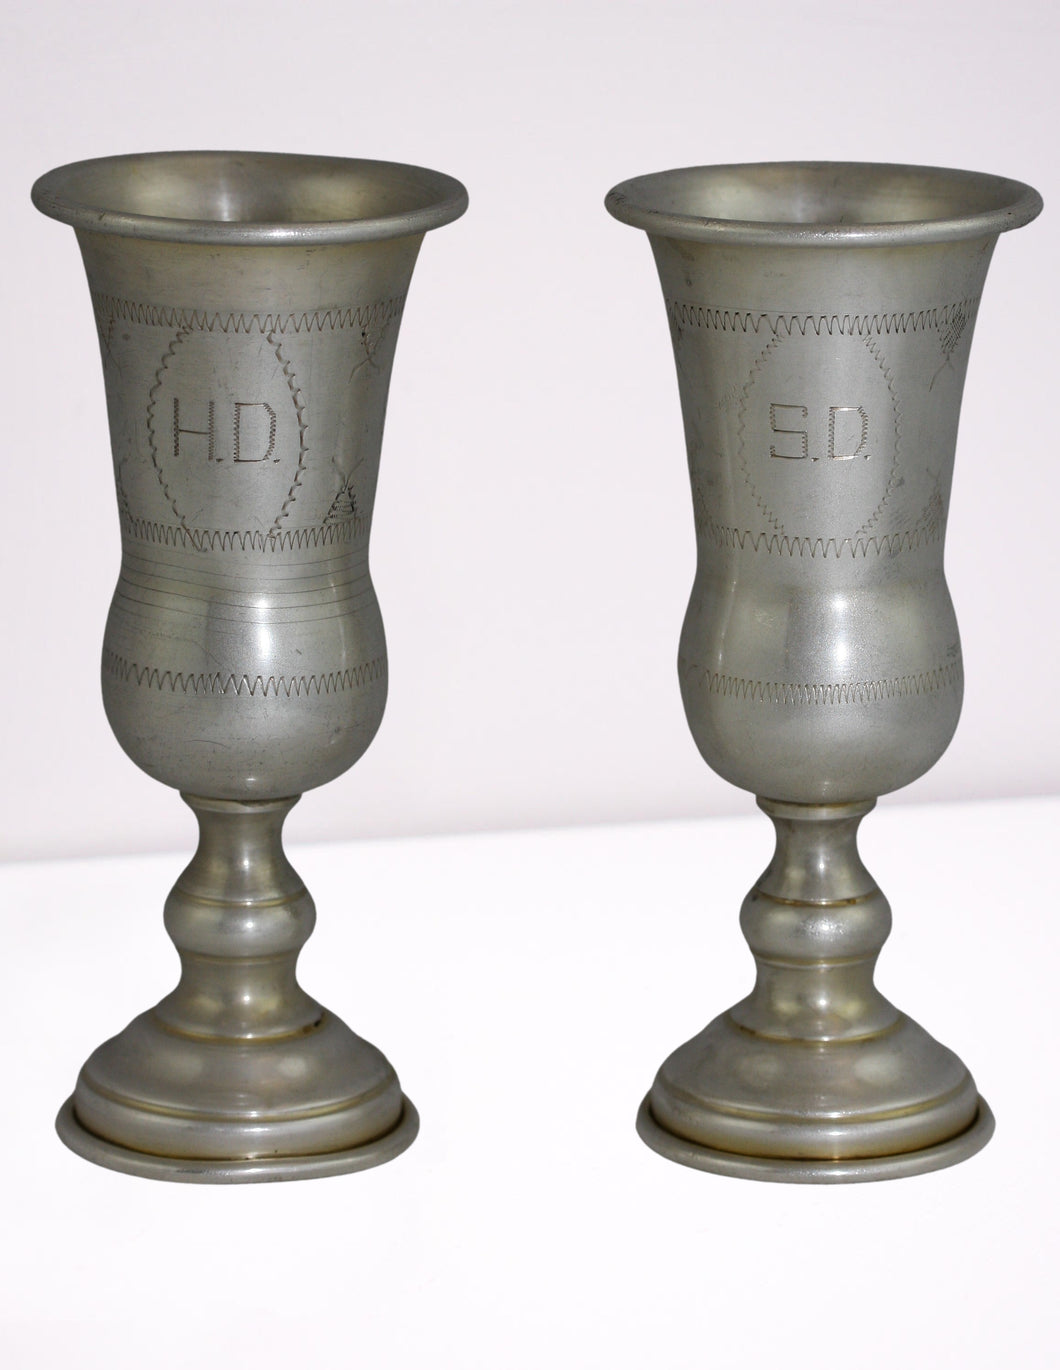 Kiddush cups in Russian taste. A pair. Sterling silver. 20th c.